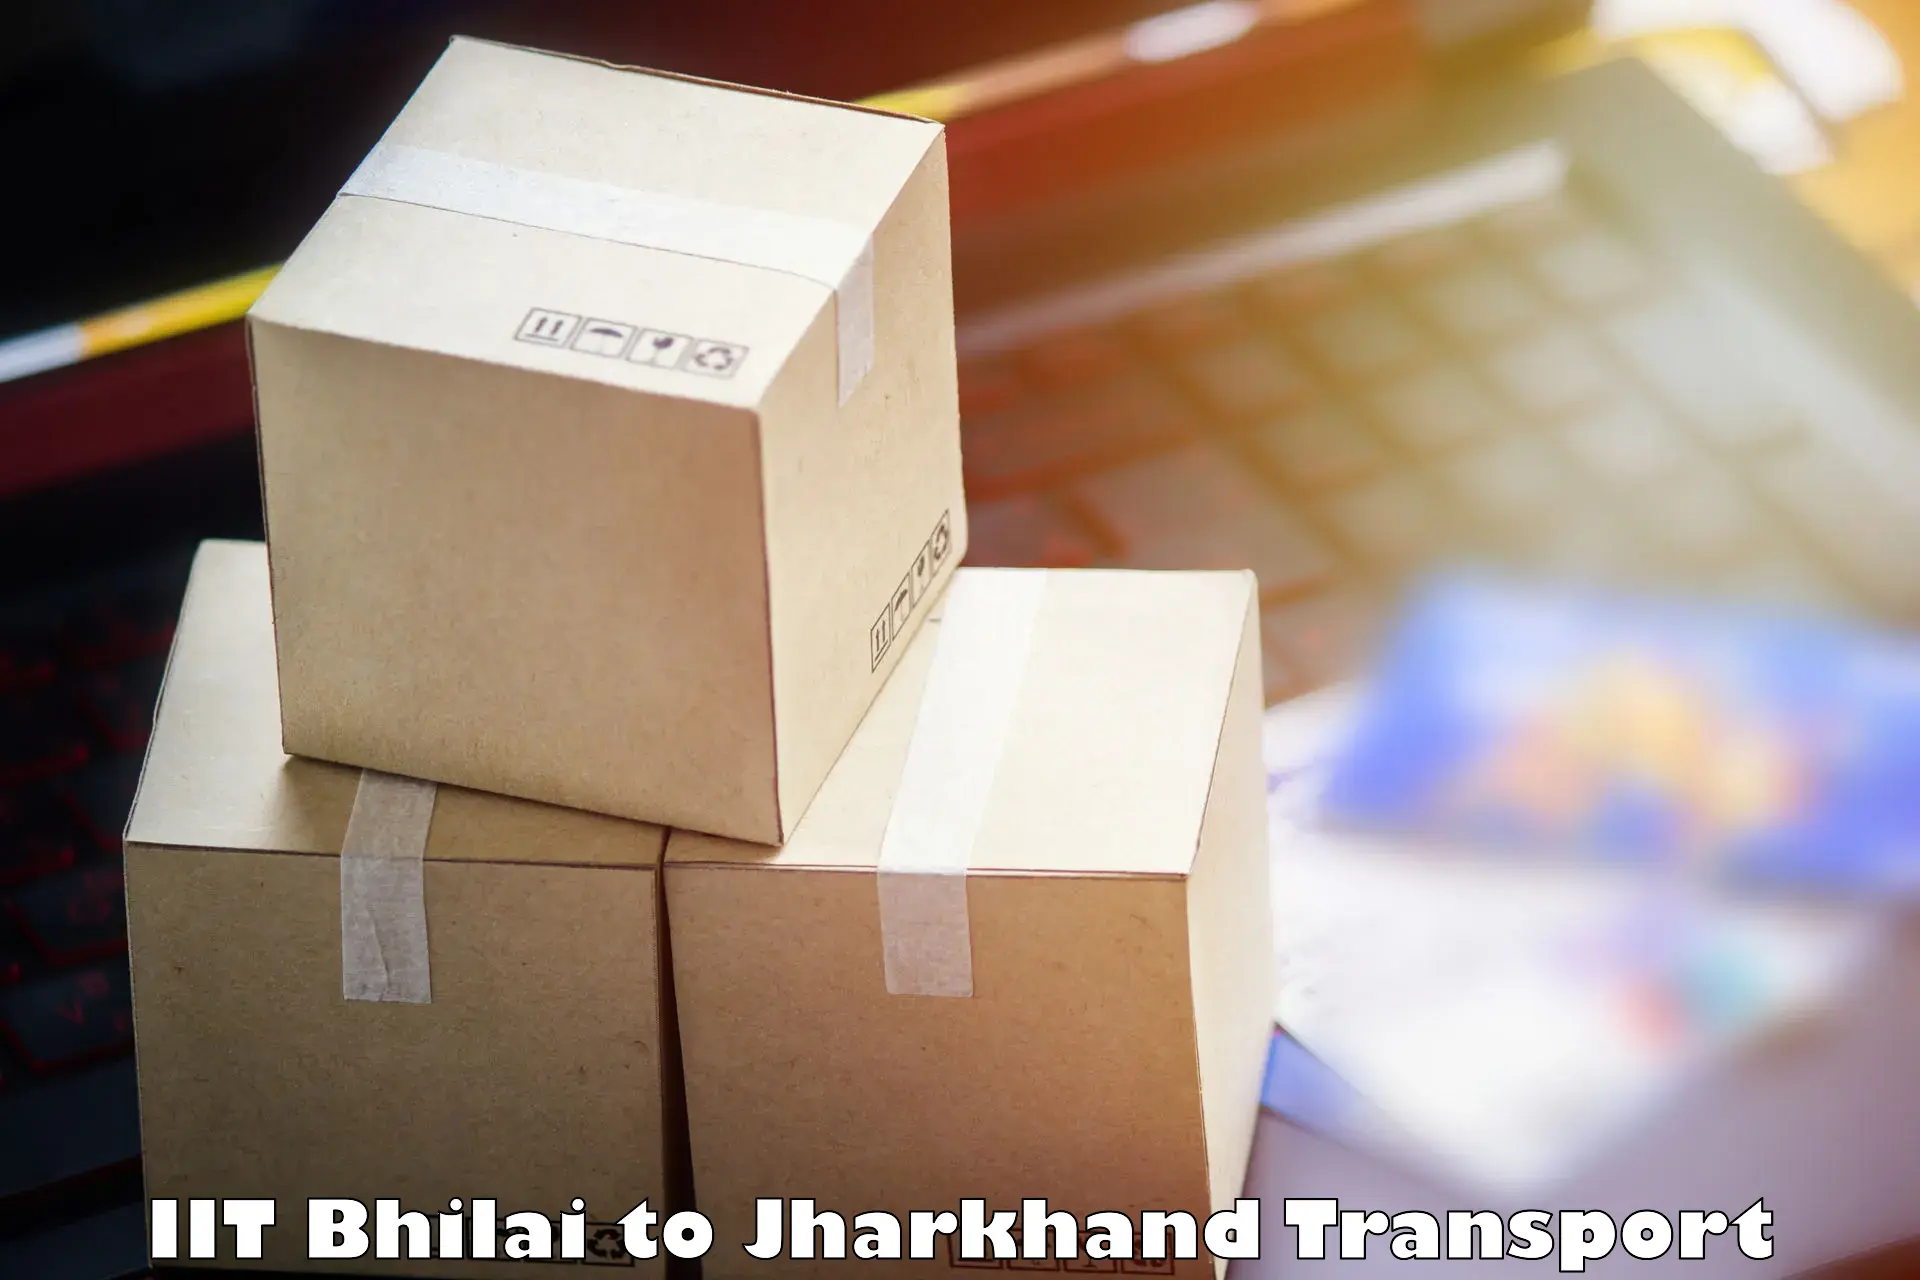 Container transport service IIT Bhilai to Godda